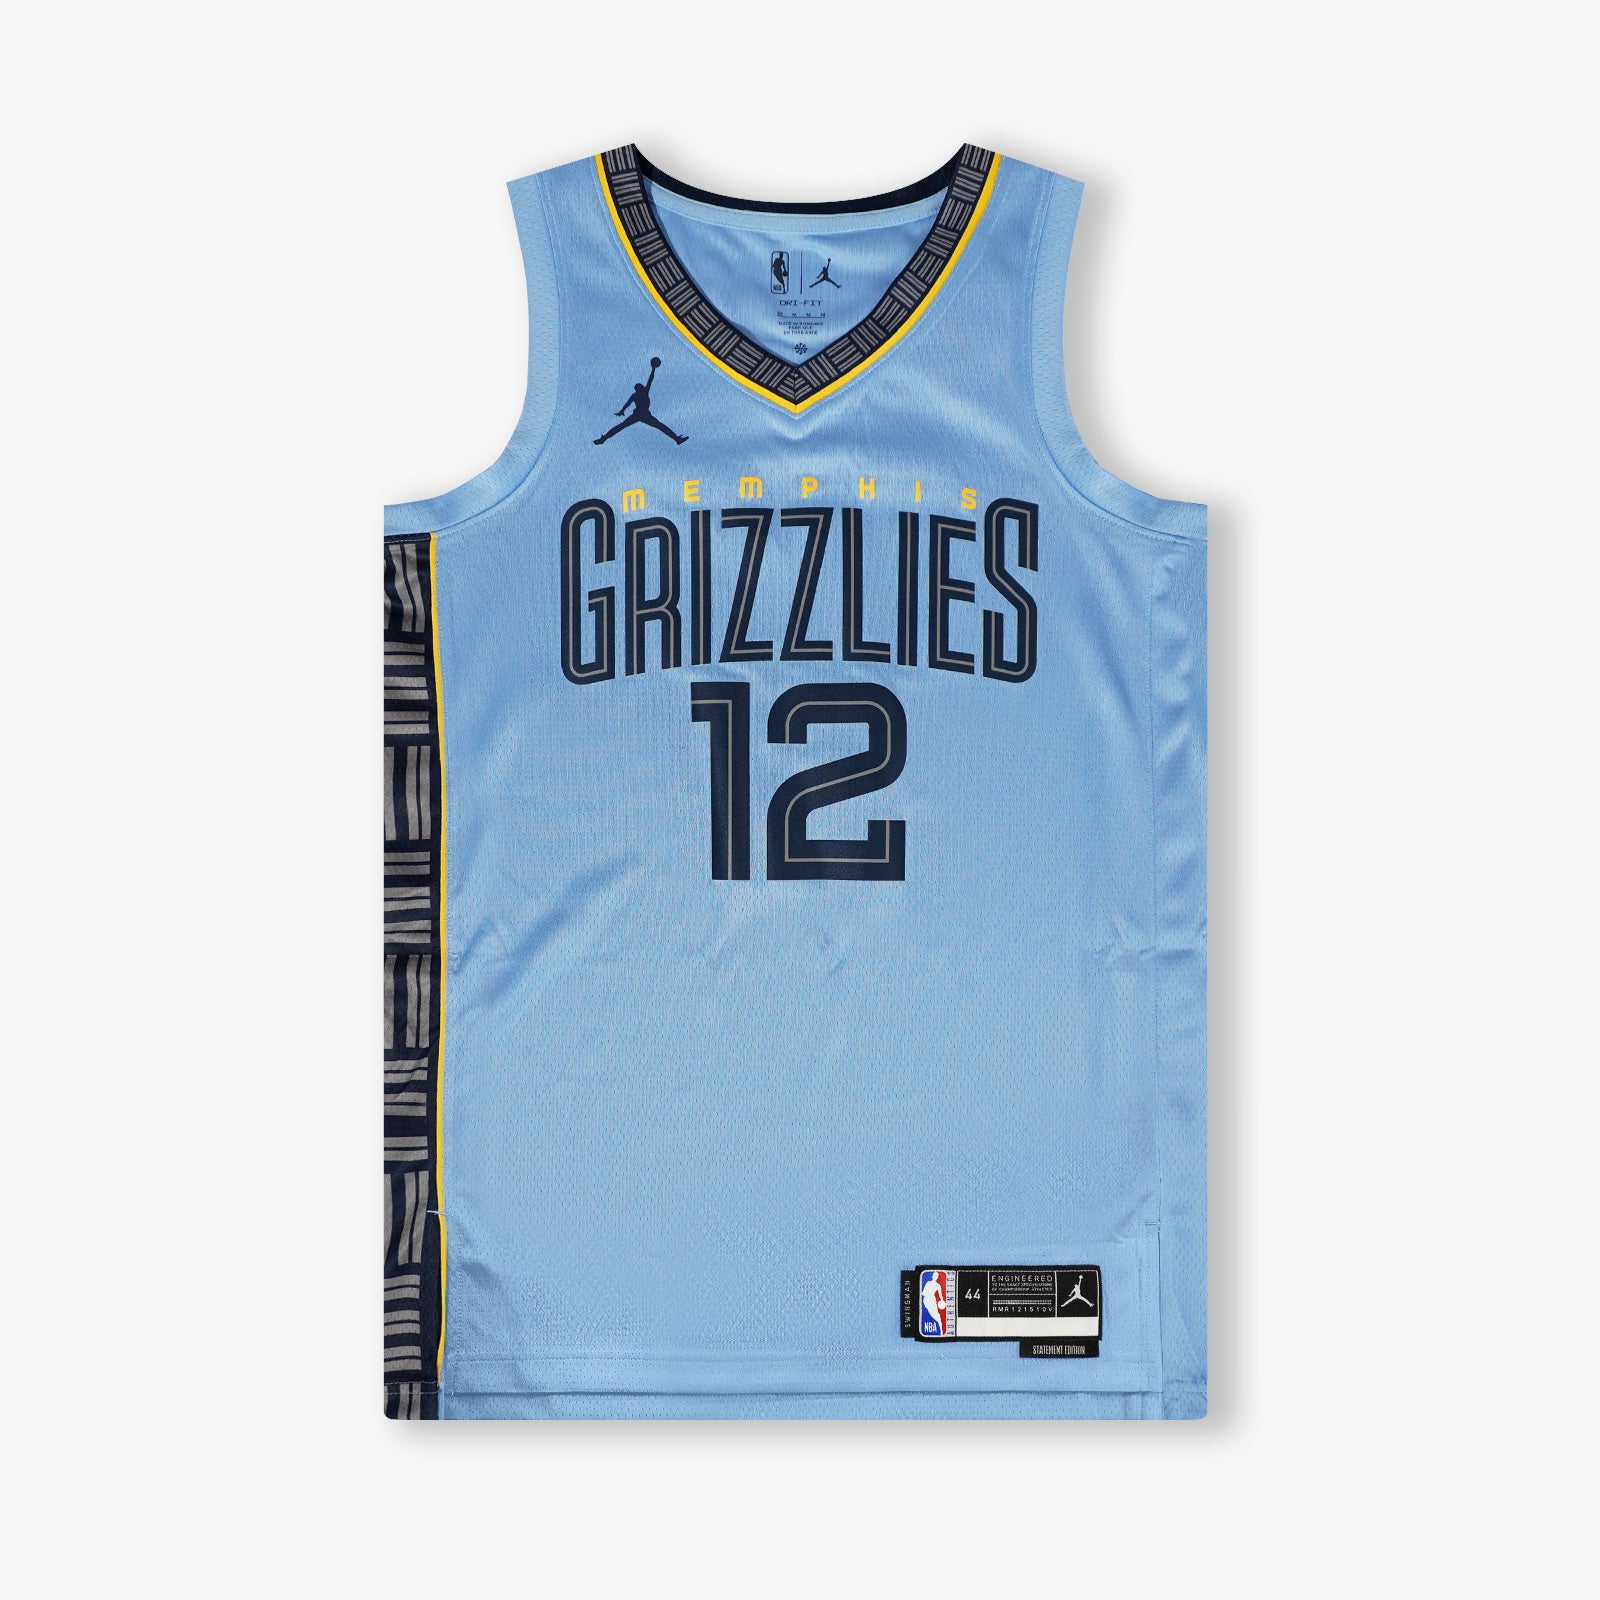 Memphis Grizzlies Jerseys, Ja Morant Grizzlies Jerseys, Grizzlies Uniforms